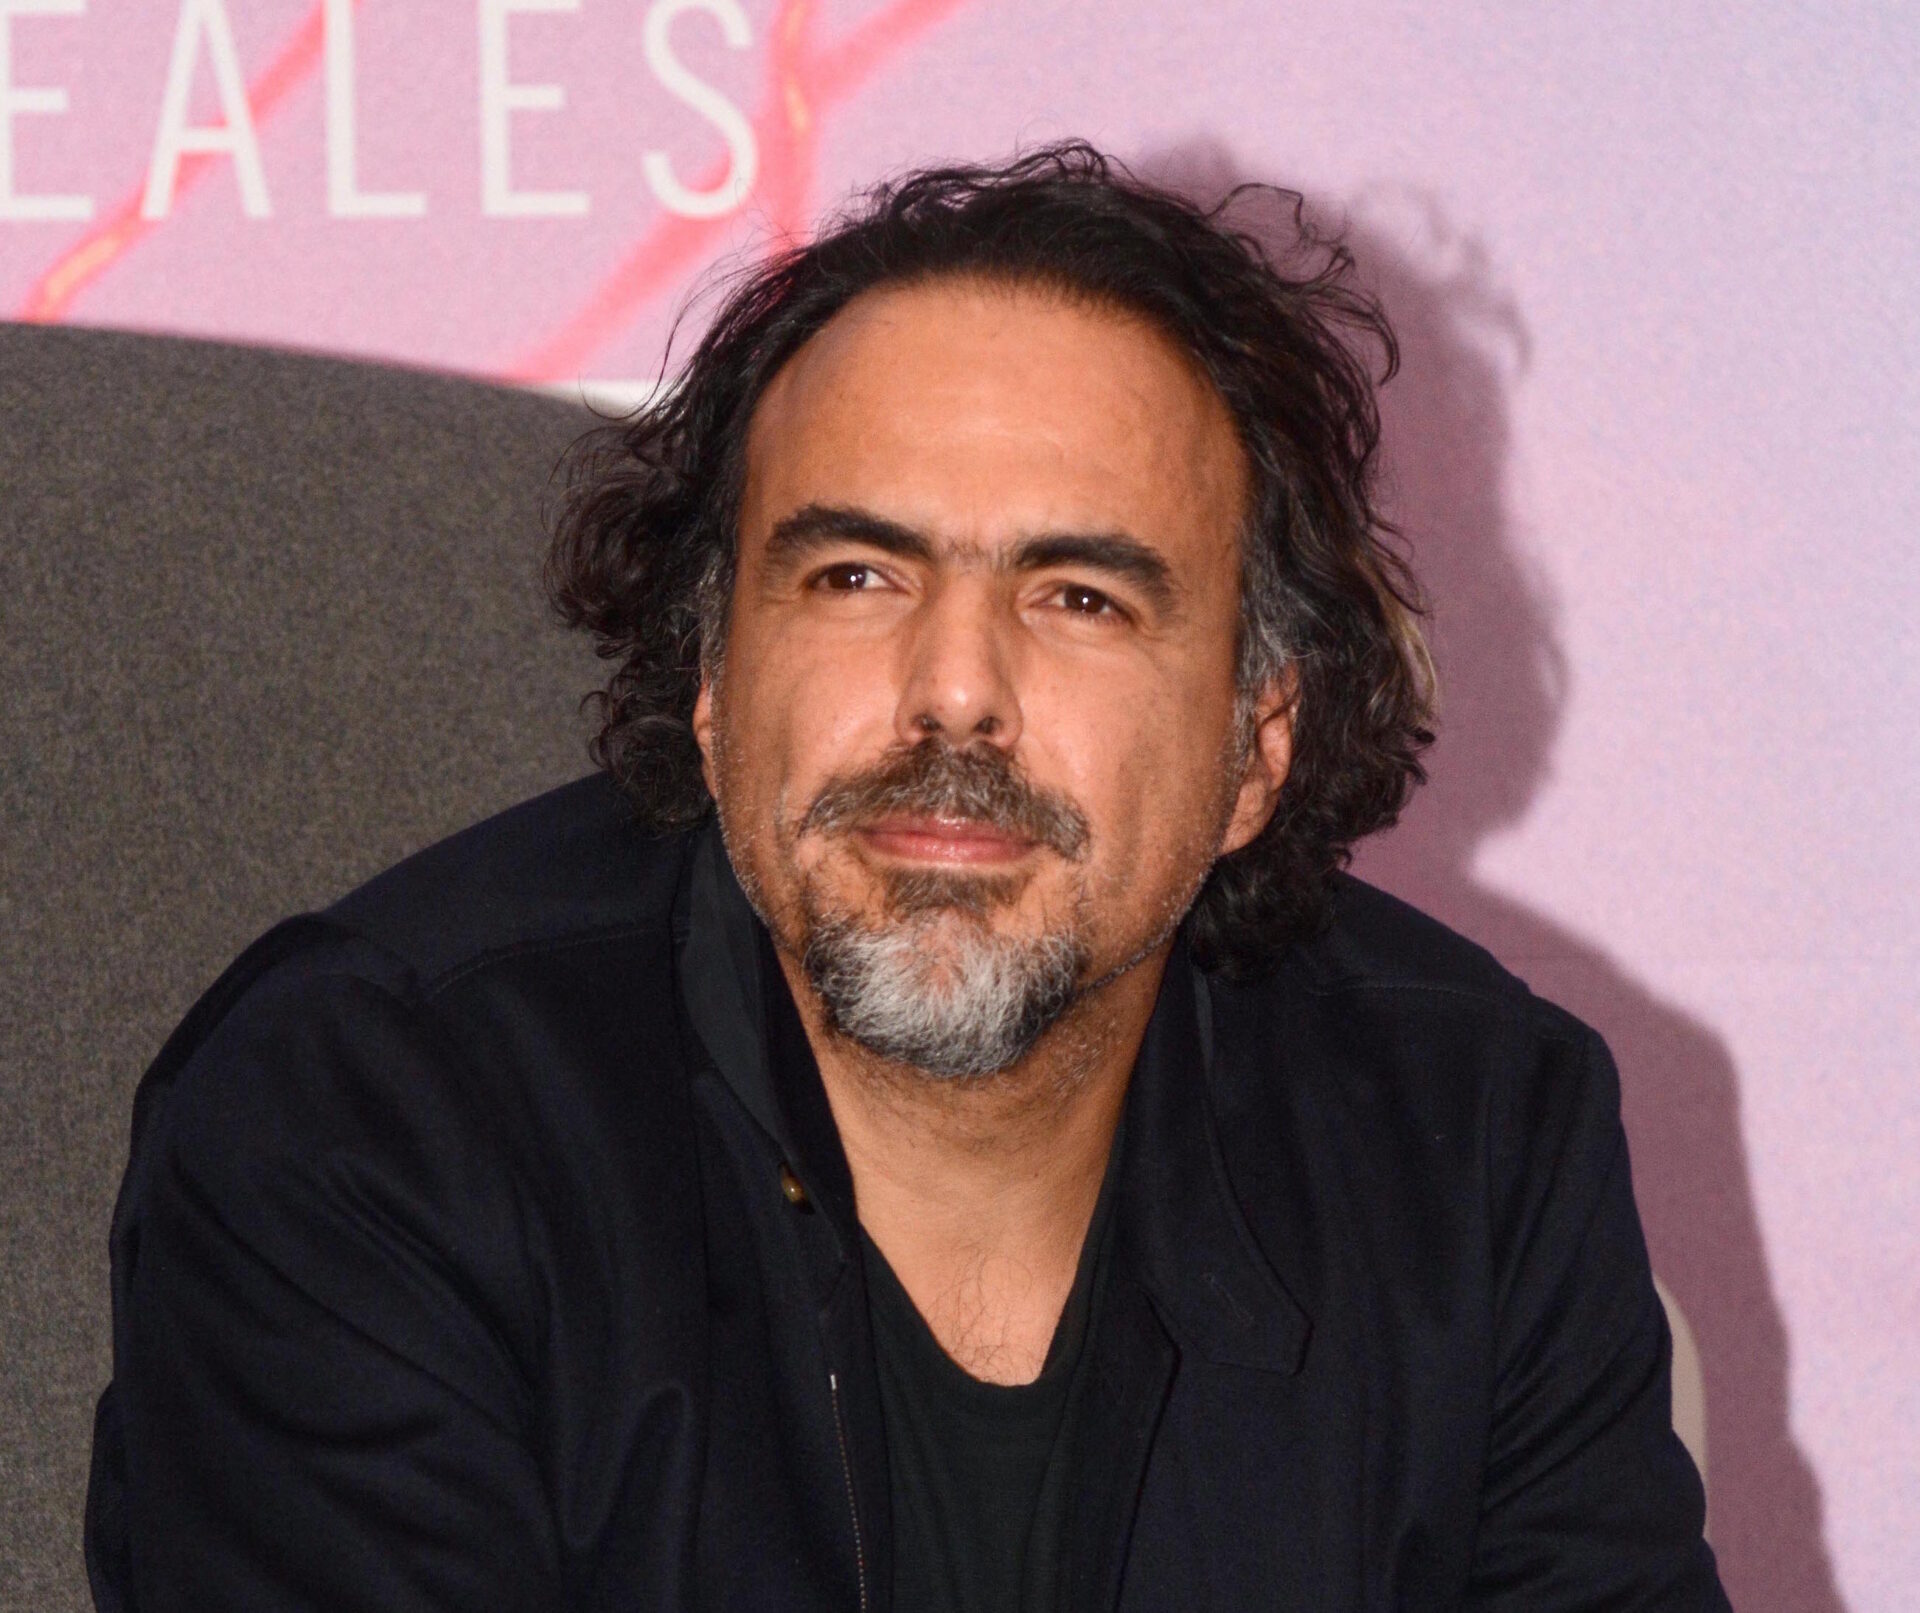 Alejandro González Iñárritu dice no a las redes sociales